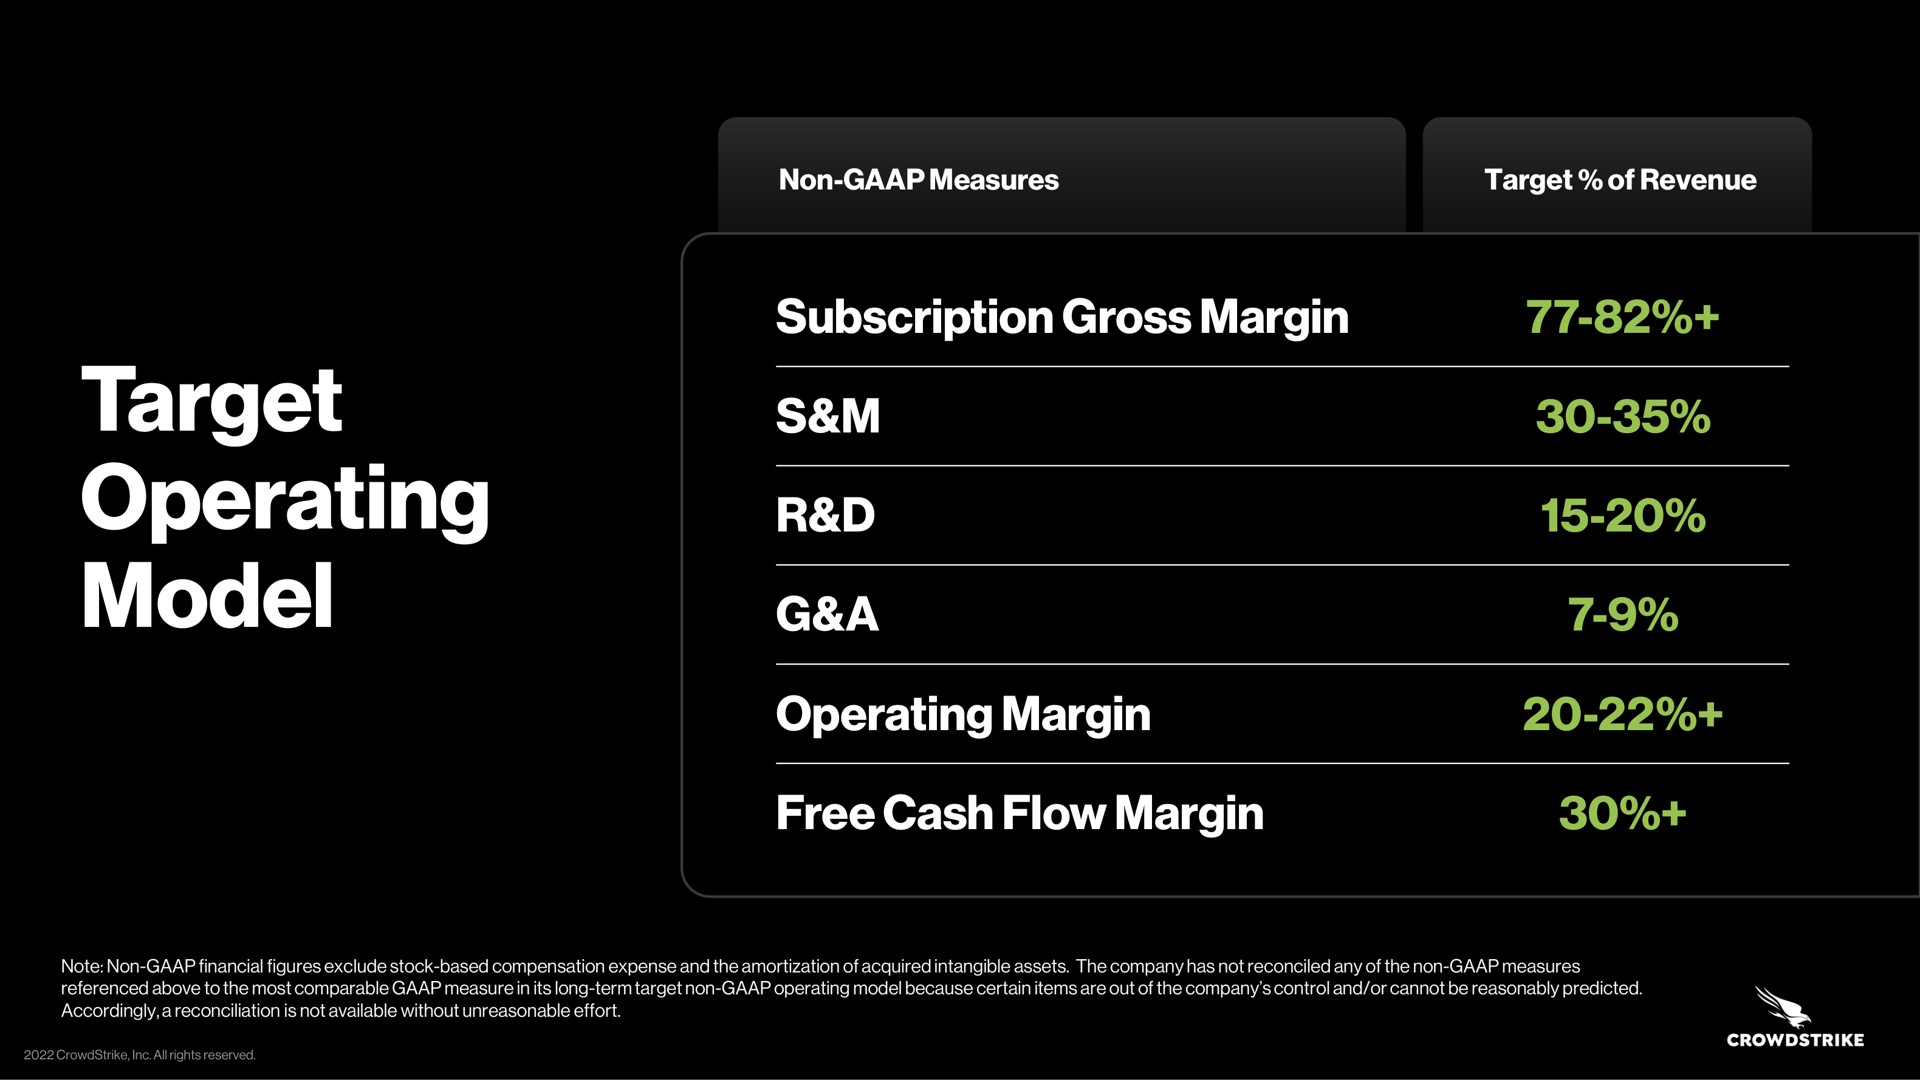 target operating model subscription gross margin or a margin free cash flow margin | Crowdstrike